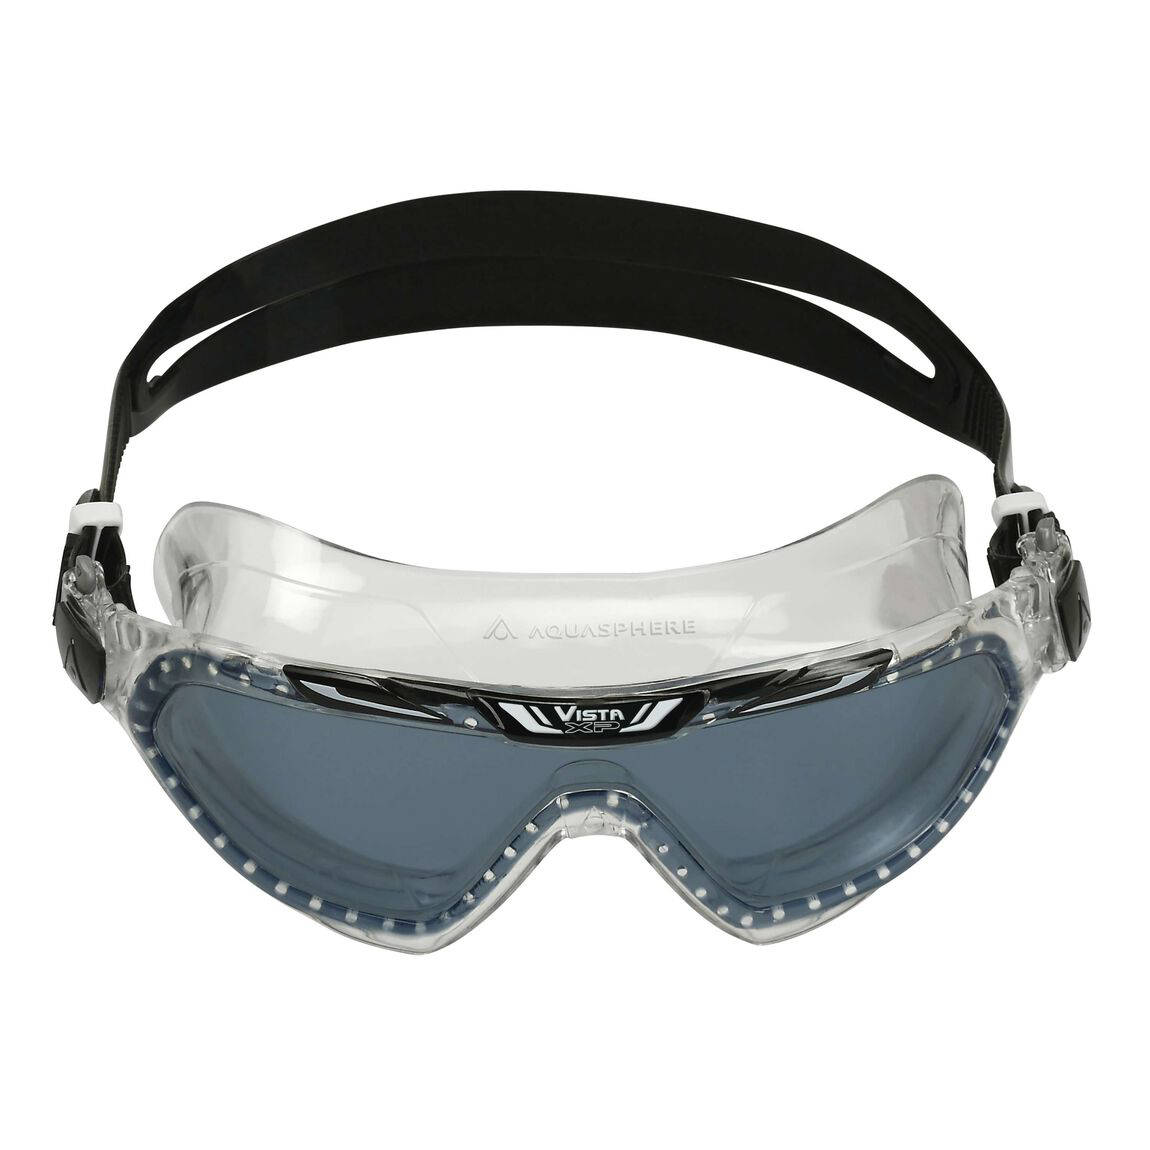 Aquasphere okulary Vista XP ciemne szkła transp-black